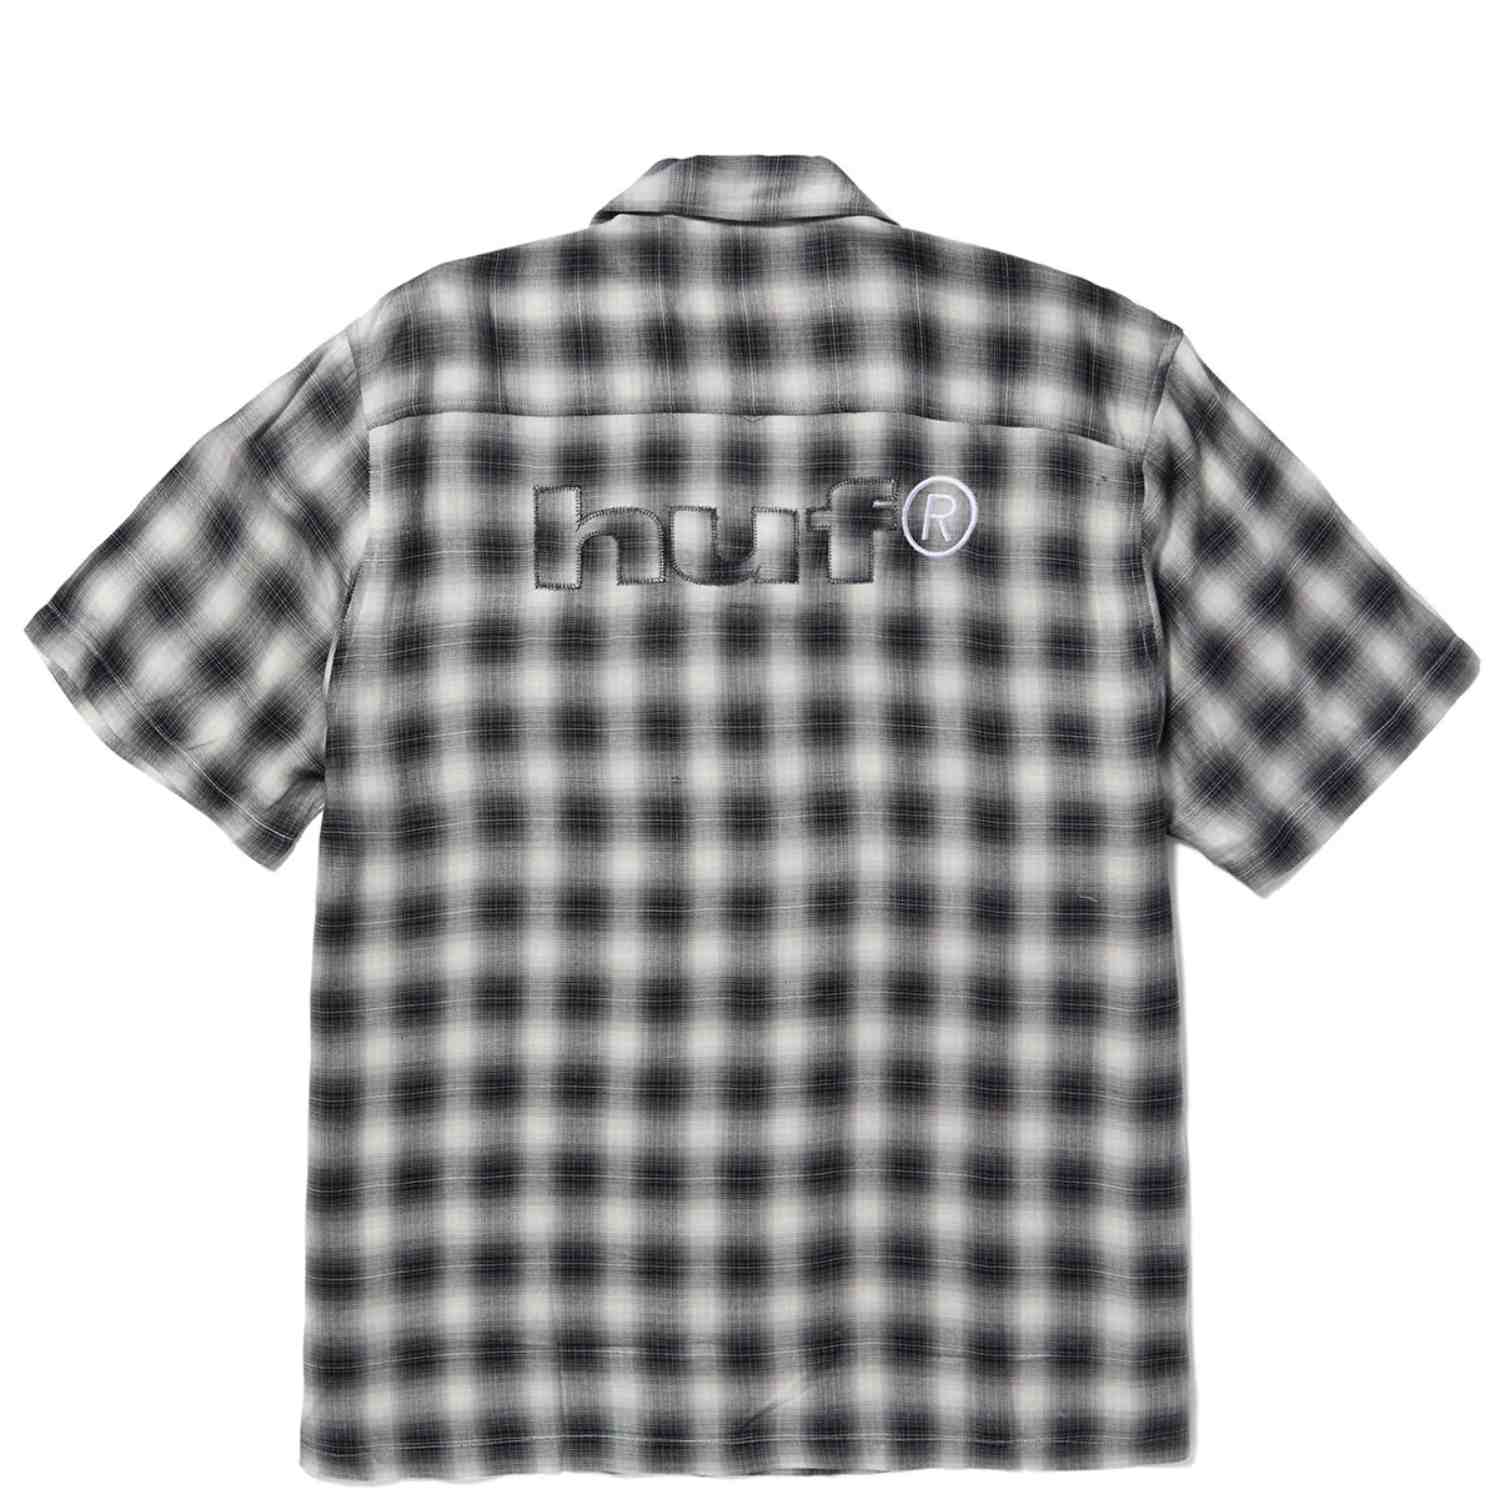 HUF - Ombre Short-Sleeve Work Shirt - Black